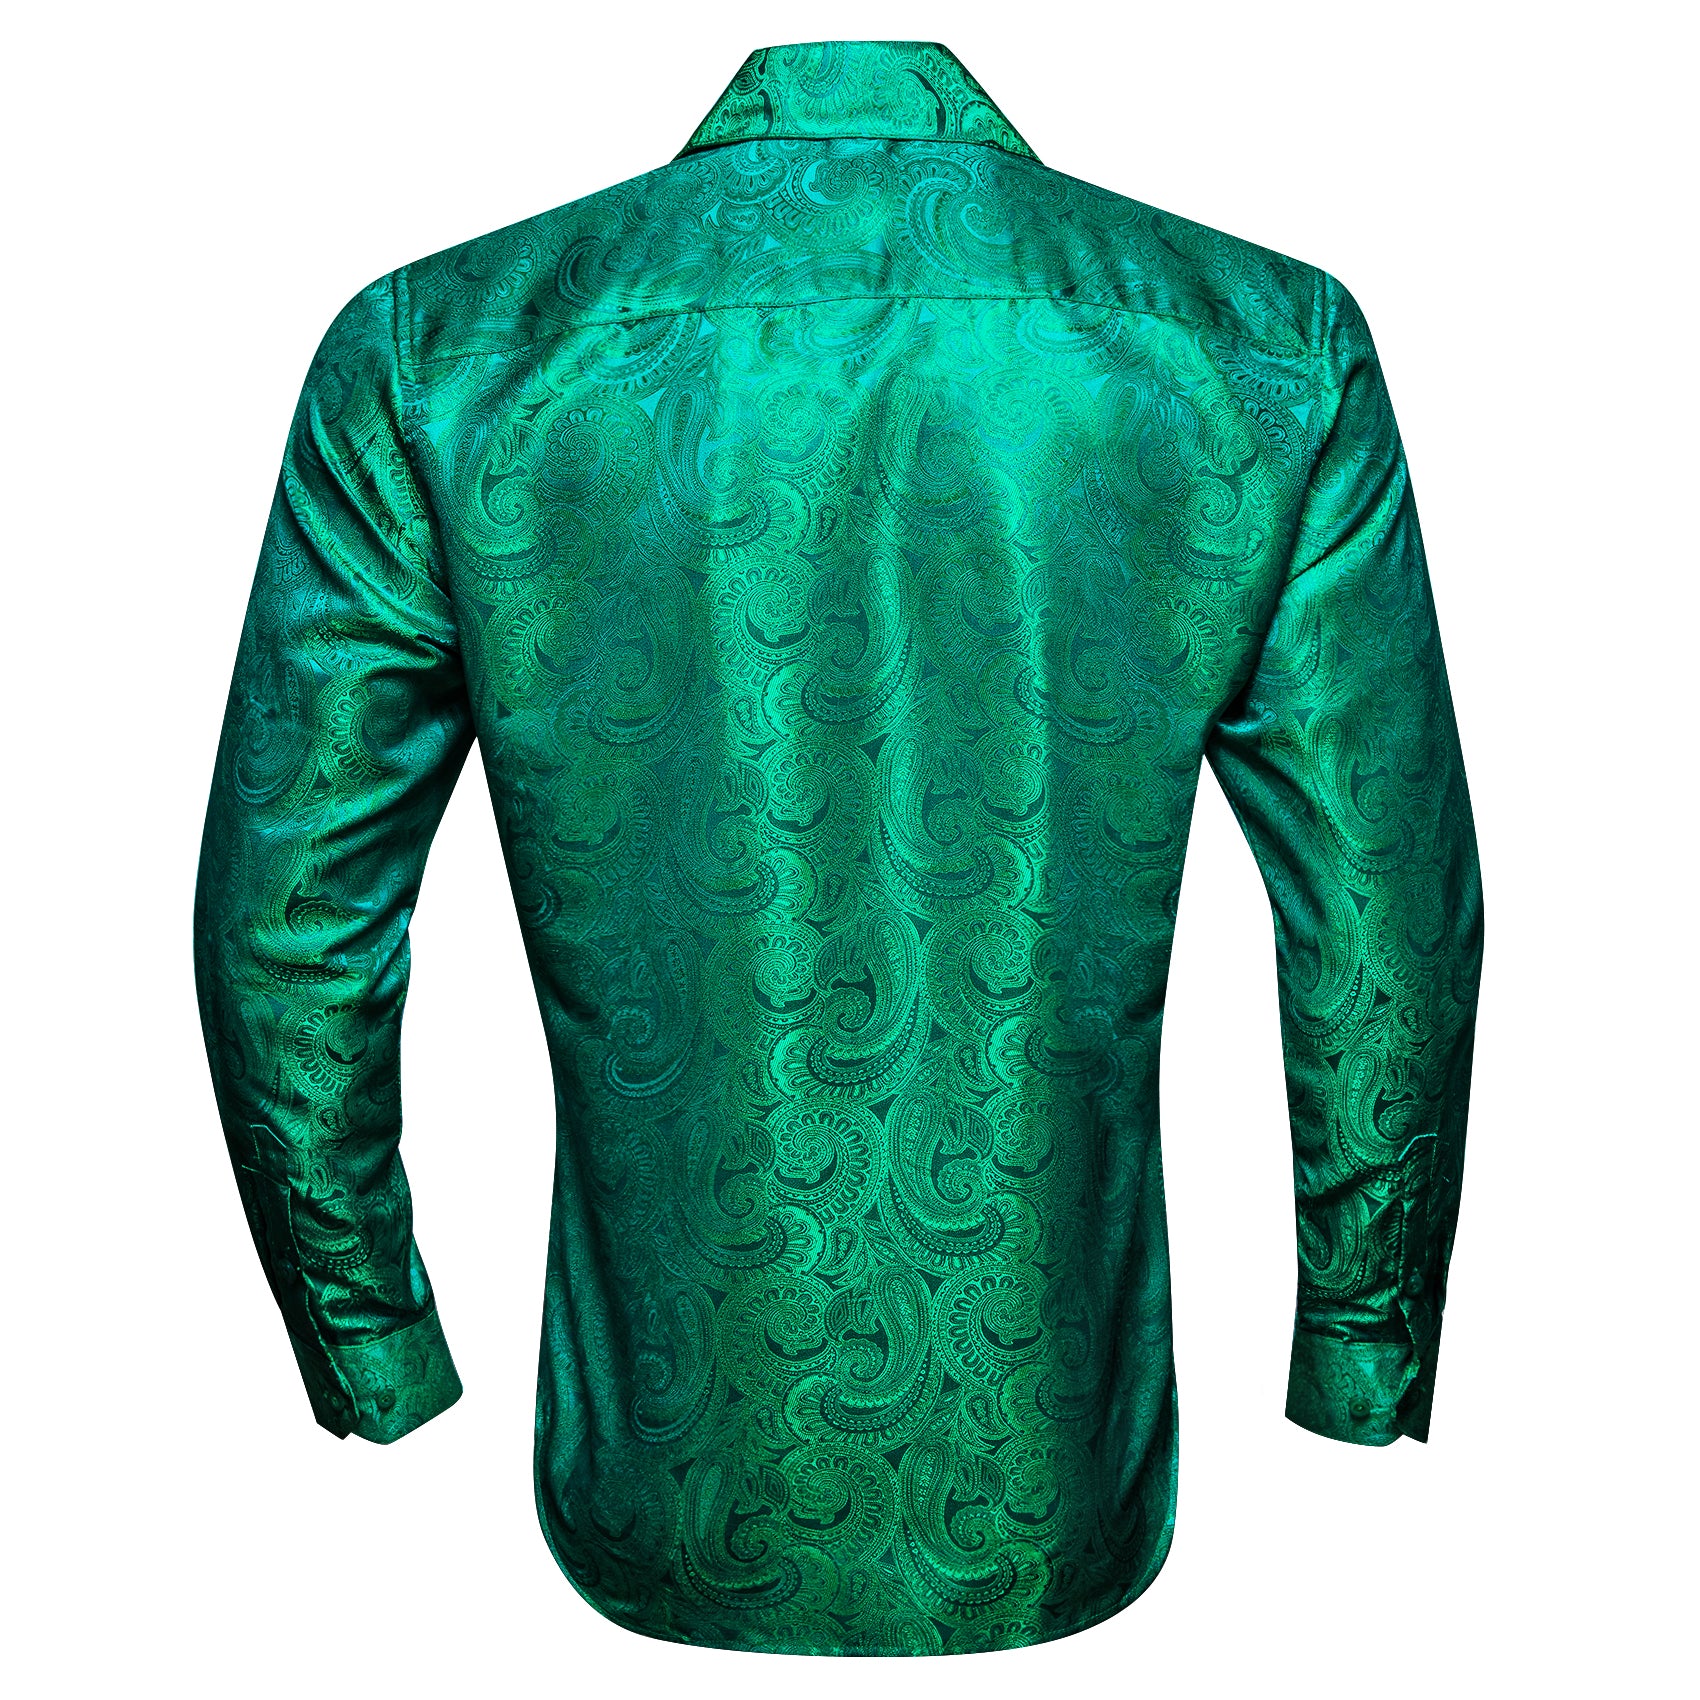 Barry.wang Pale Green Paisley Silk Men's Shirt